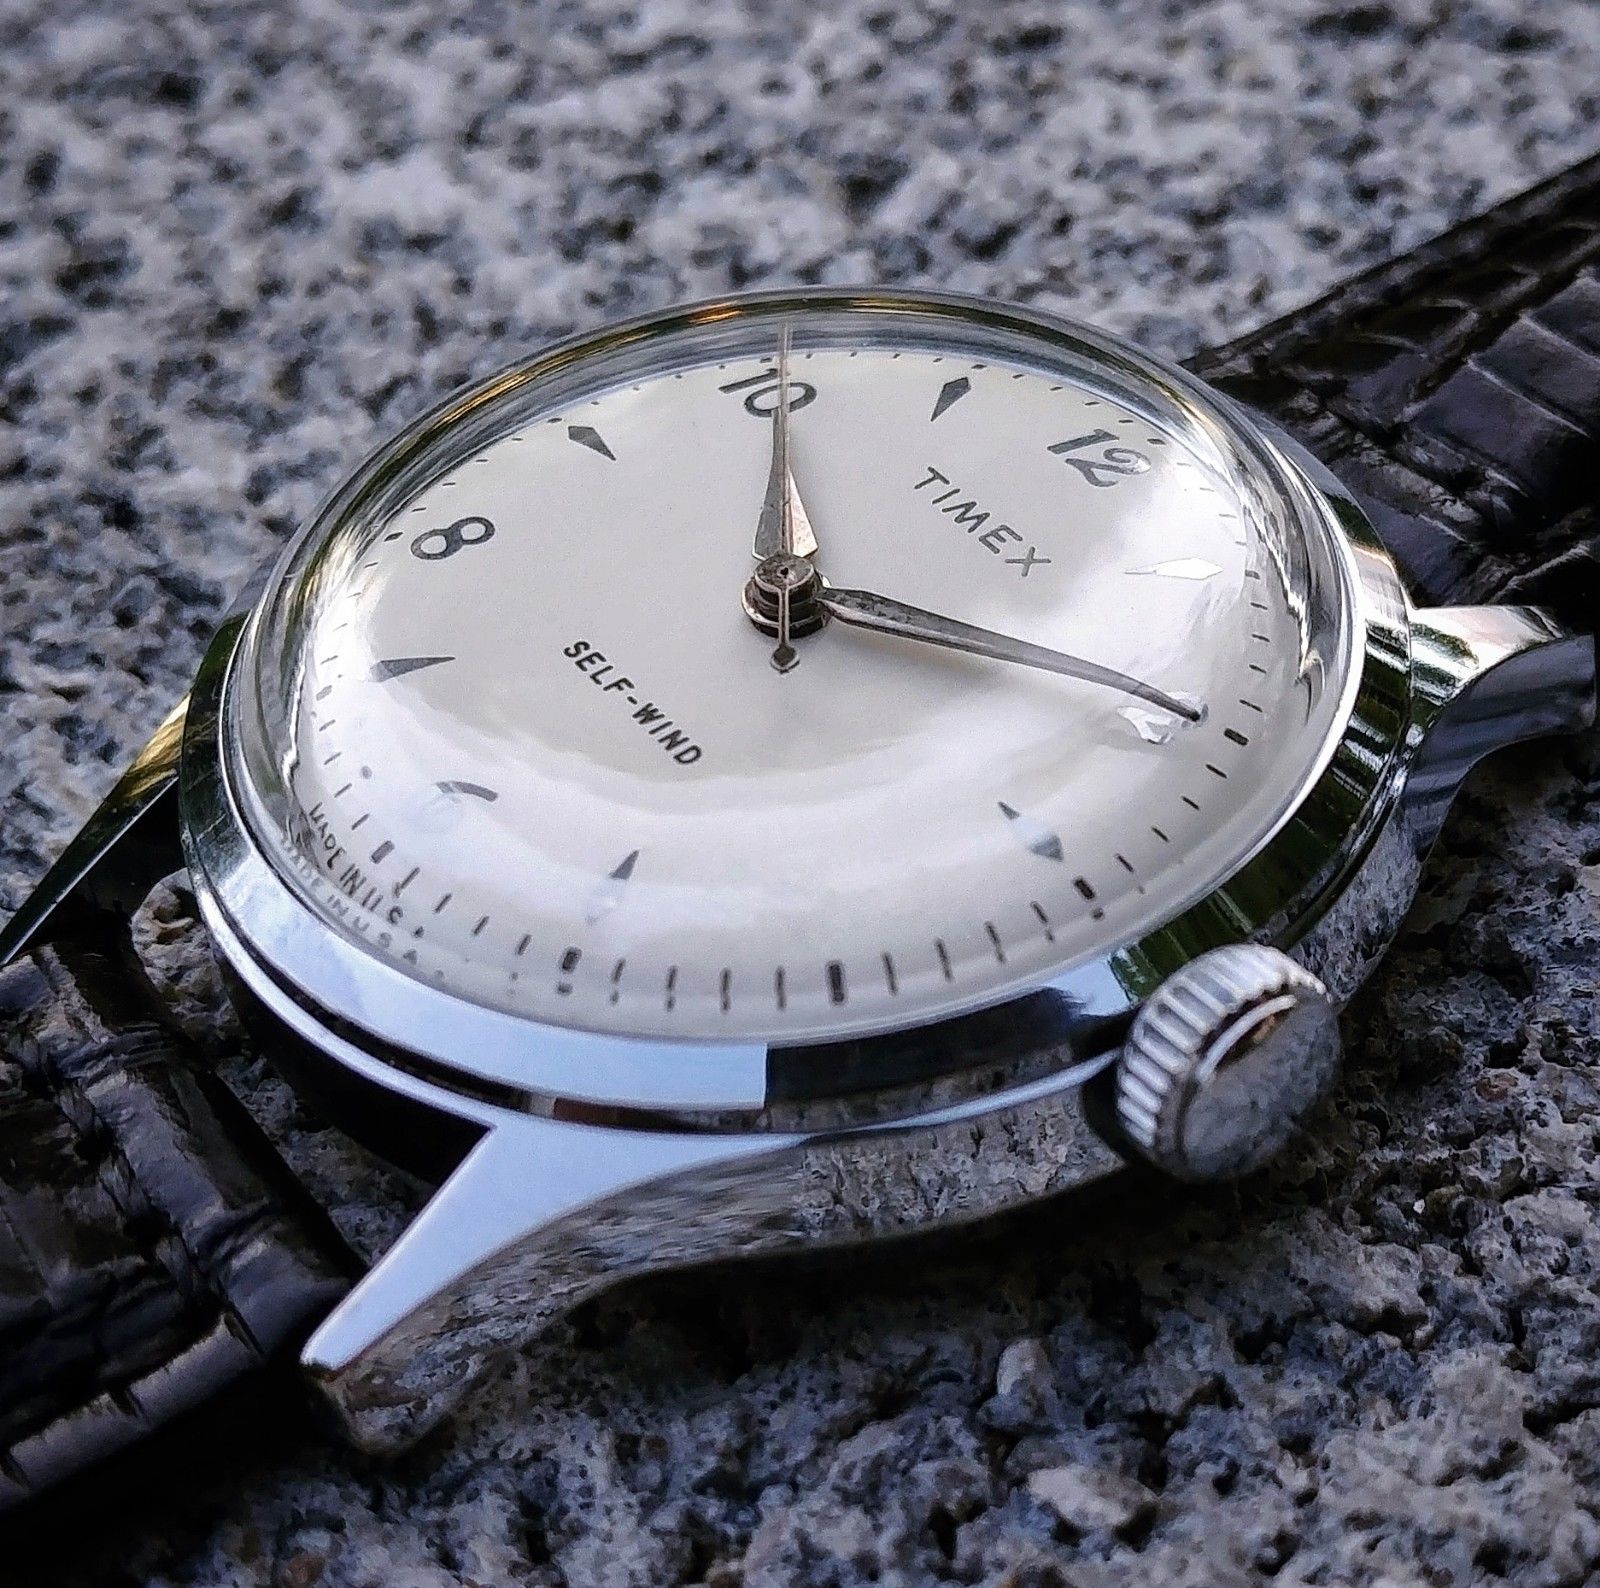 Original Self Wind 1958 Vintage Timex Watch: This makes Marlin looks